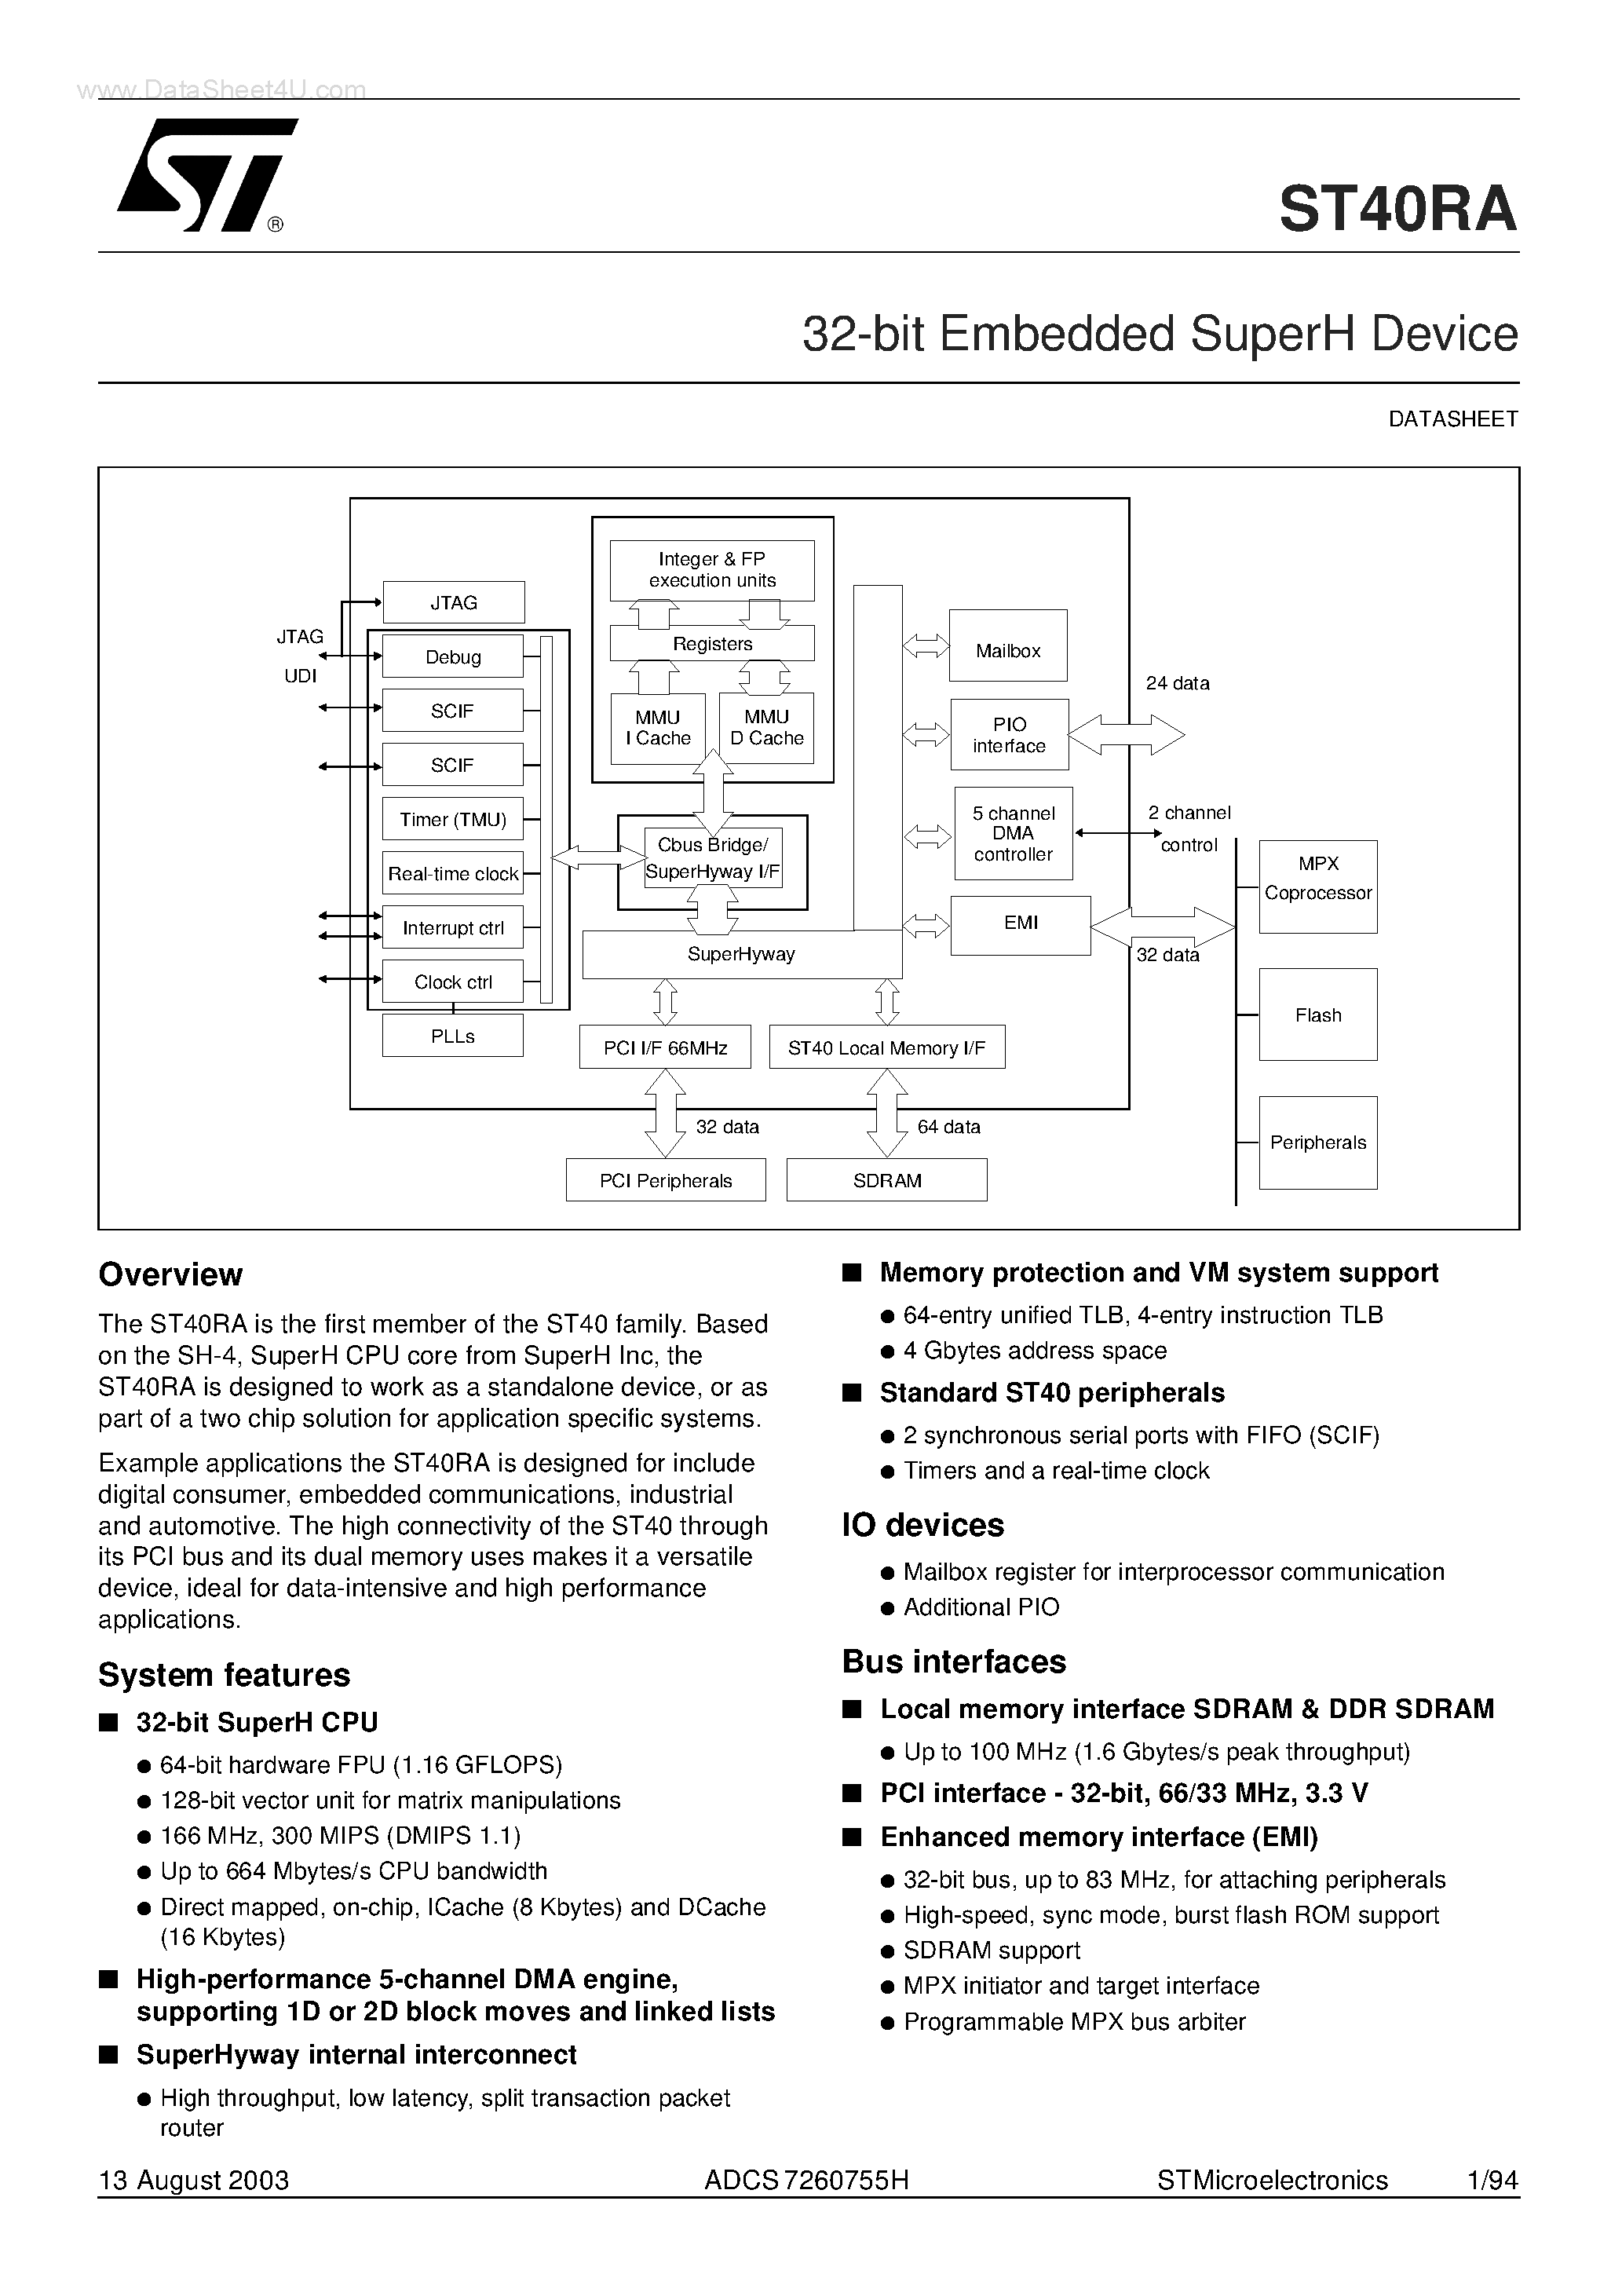 Datasheet ST40RA - 32-bit Embedded SuperH Device page 1